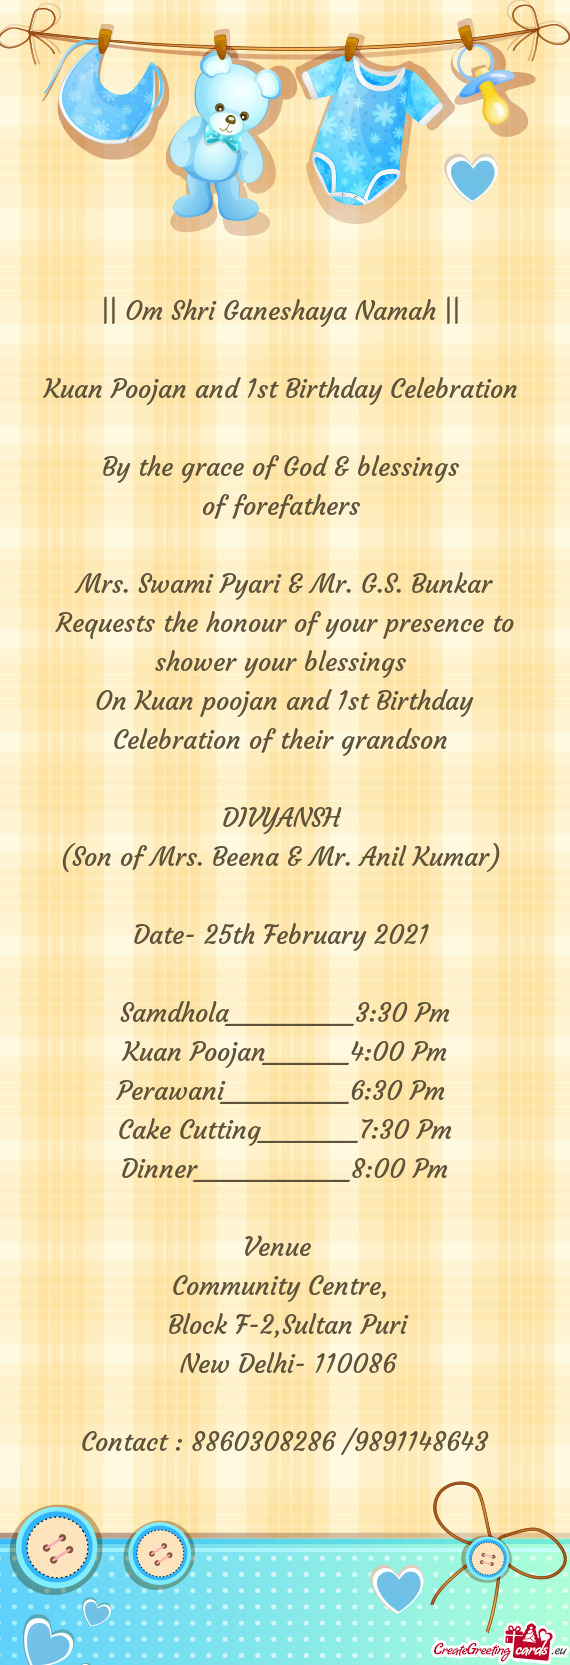 Kuan Poojan and 1st Birthday Celebration